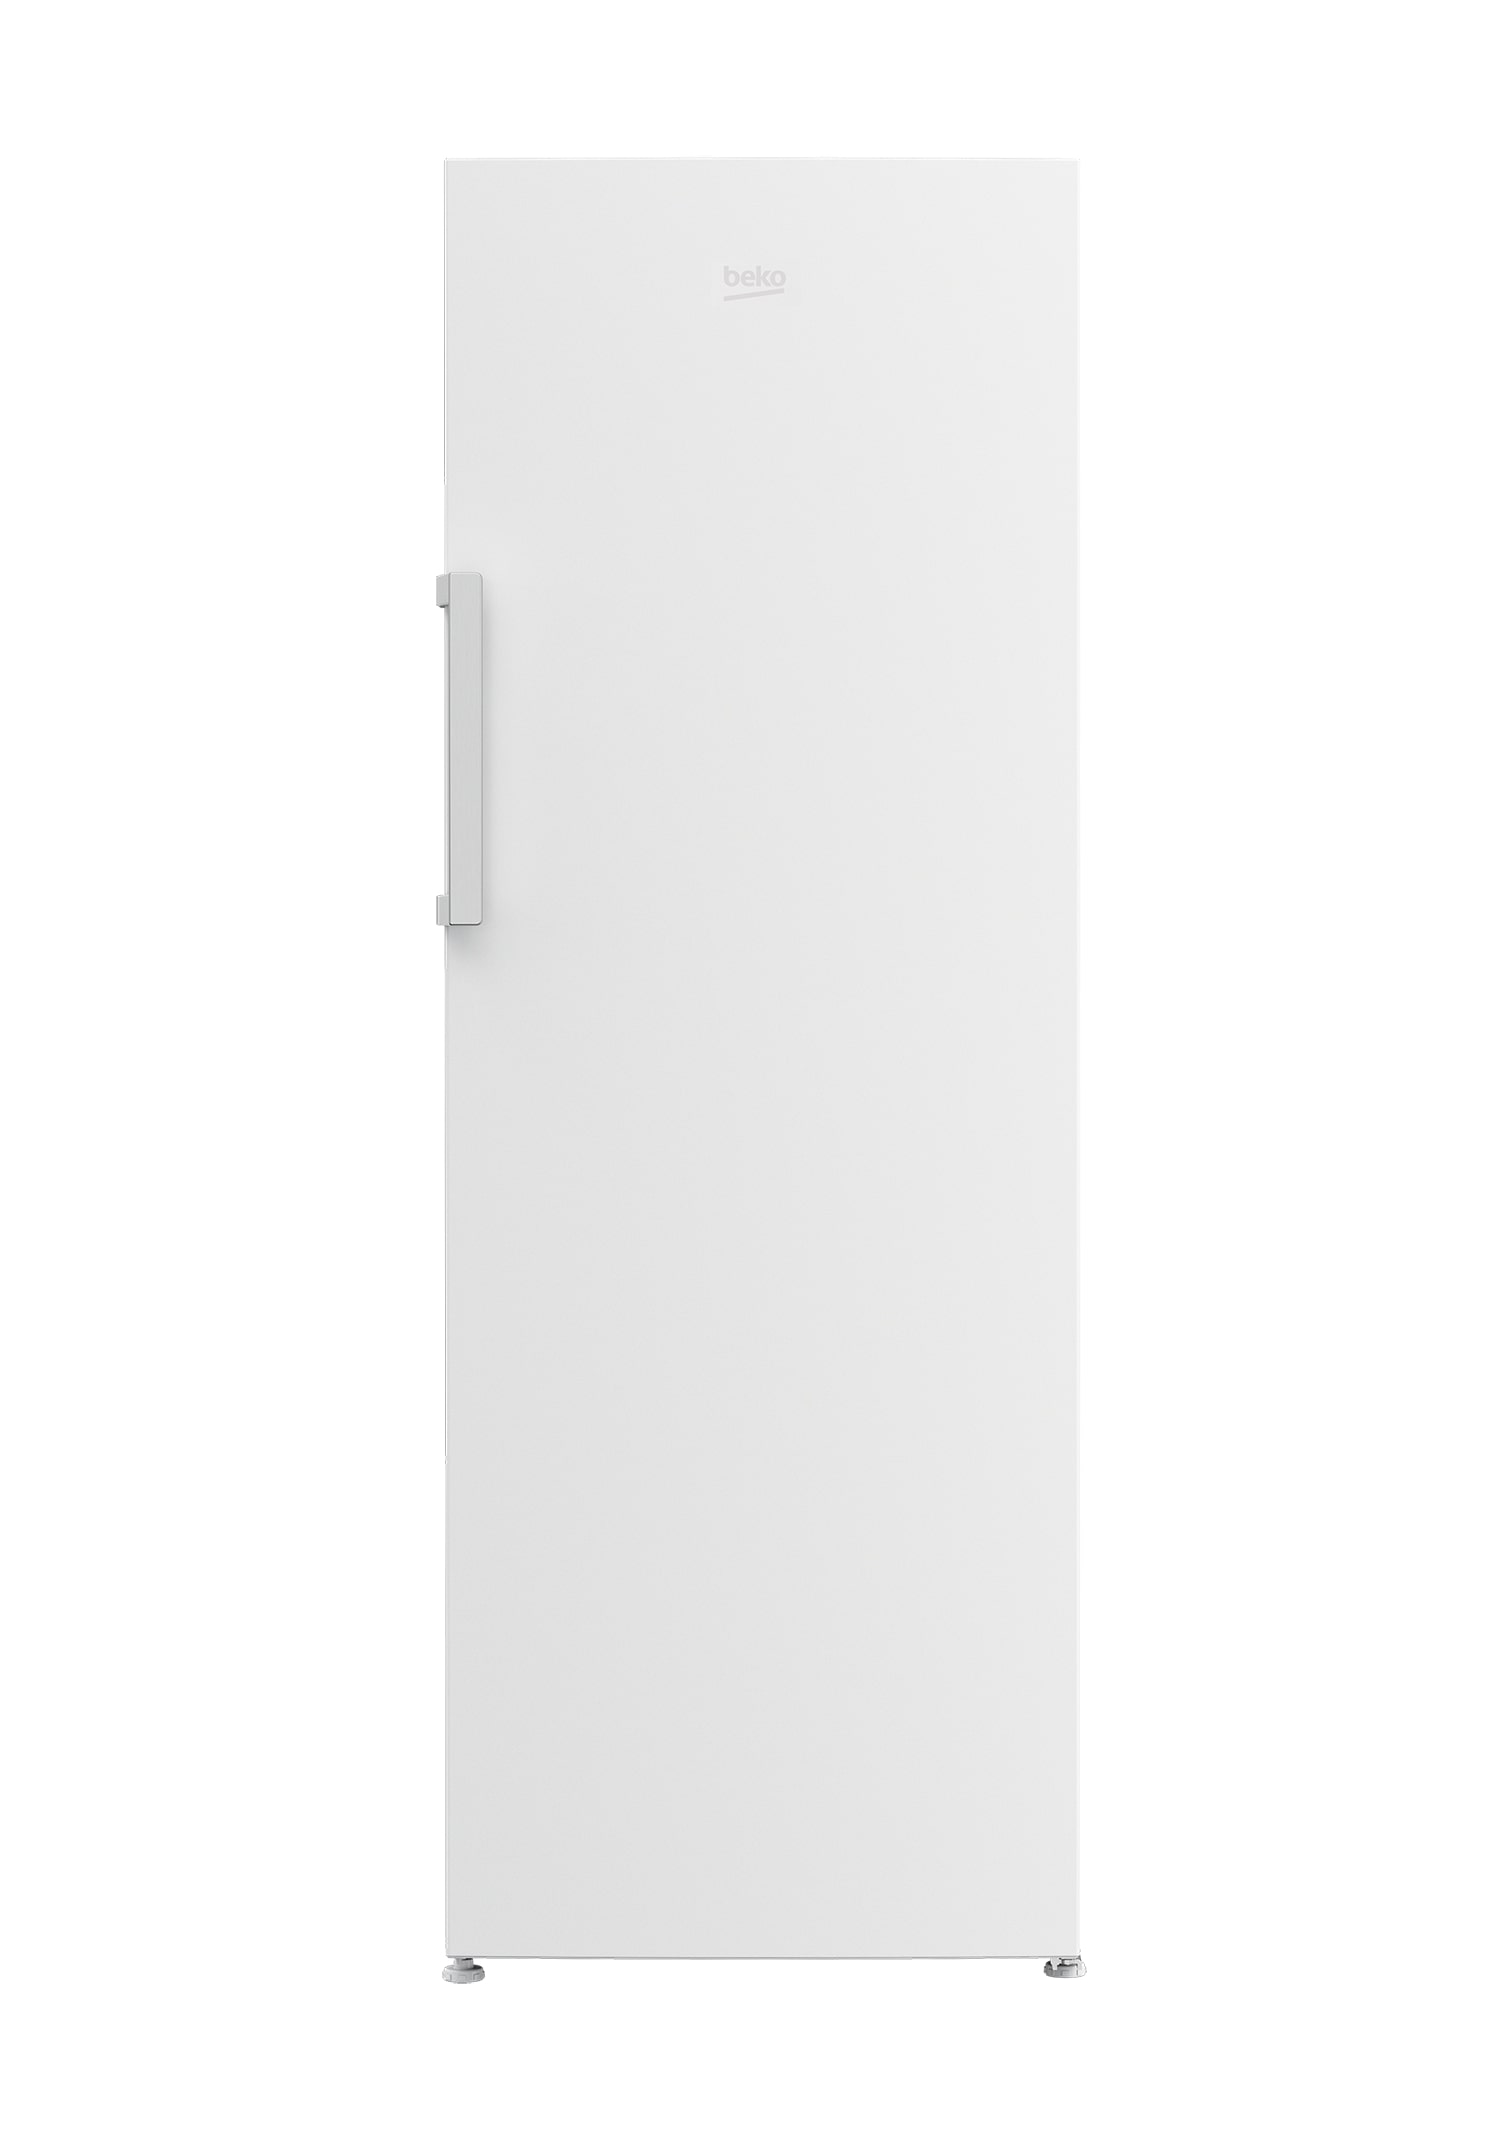 Beko 7-Drawer Upright Freezer - White